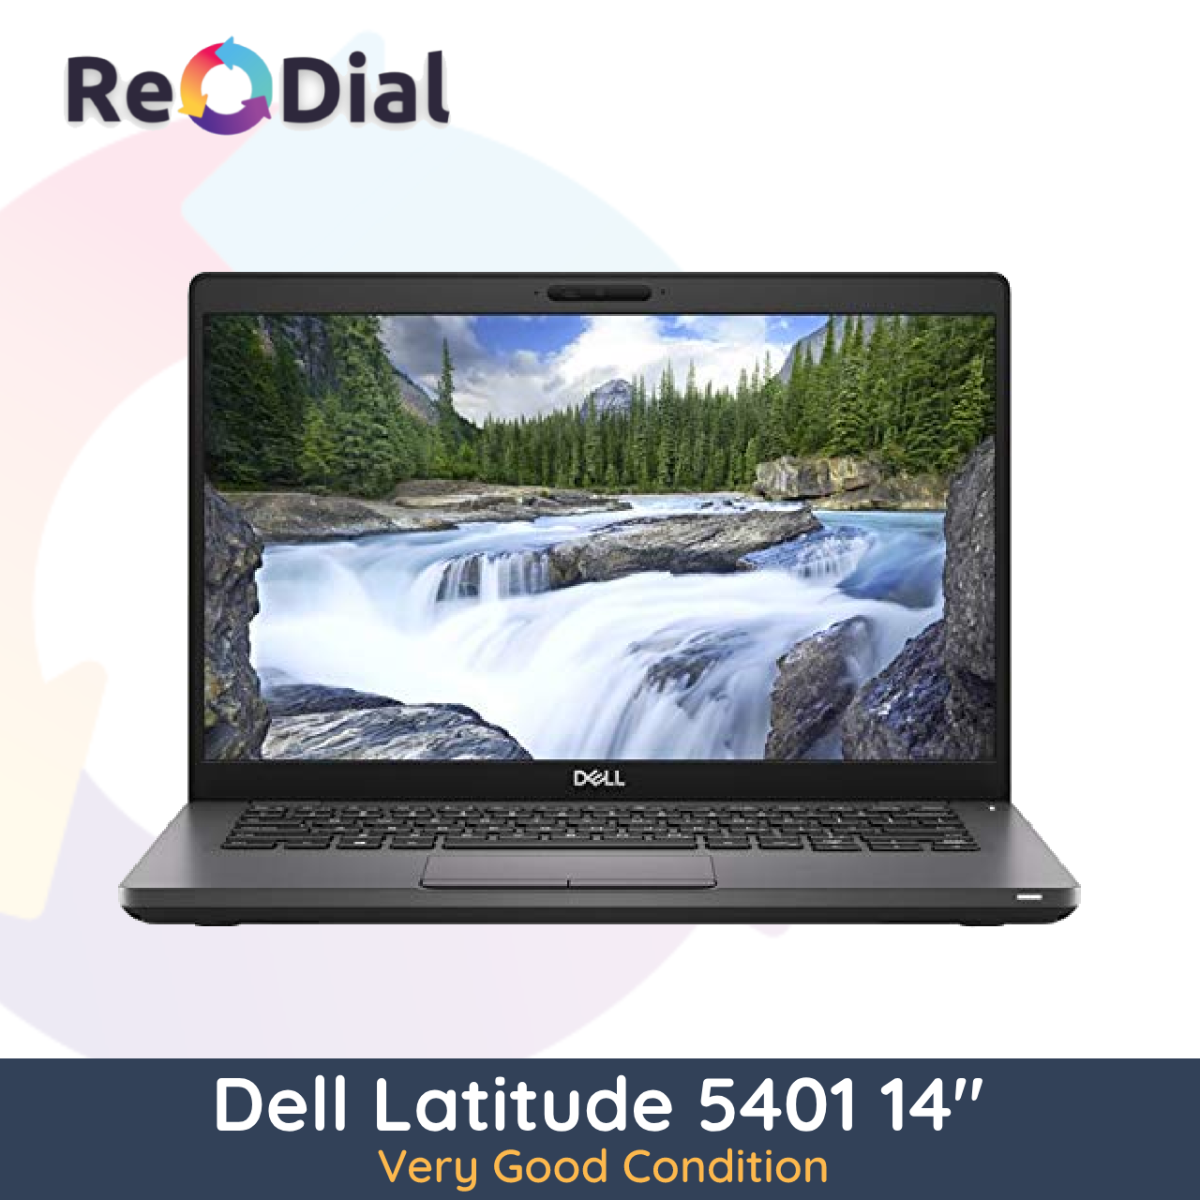 Dell Latitude 5401 14" Laptop i5-9300 256Gb 16Gb RAM - Very Good Condition